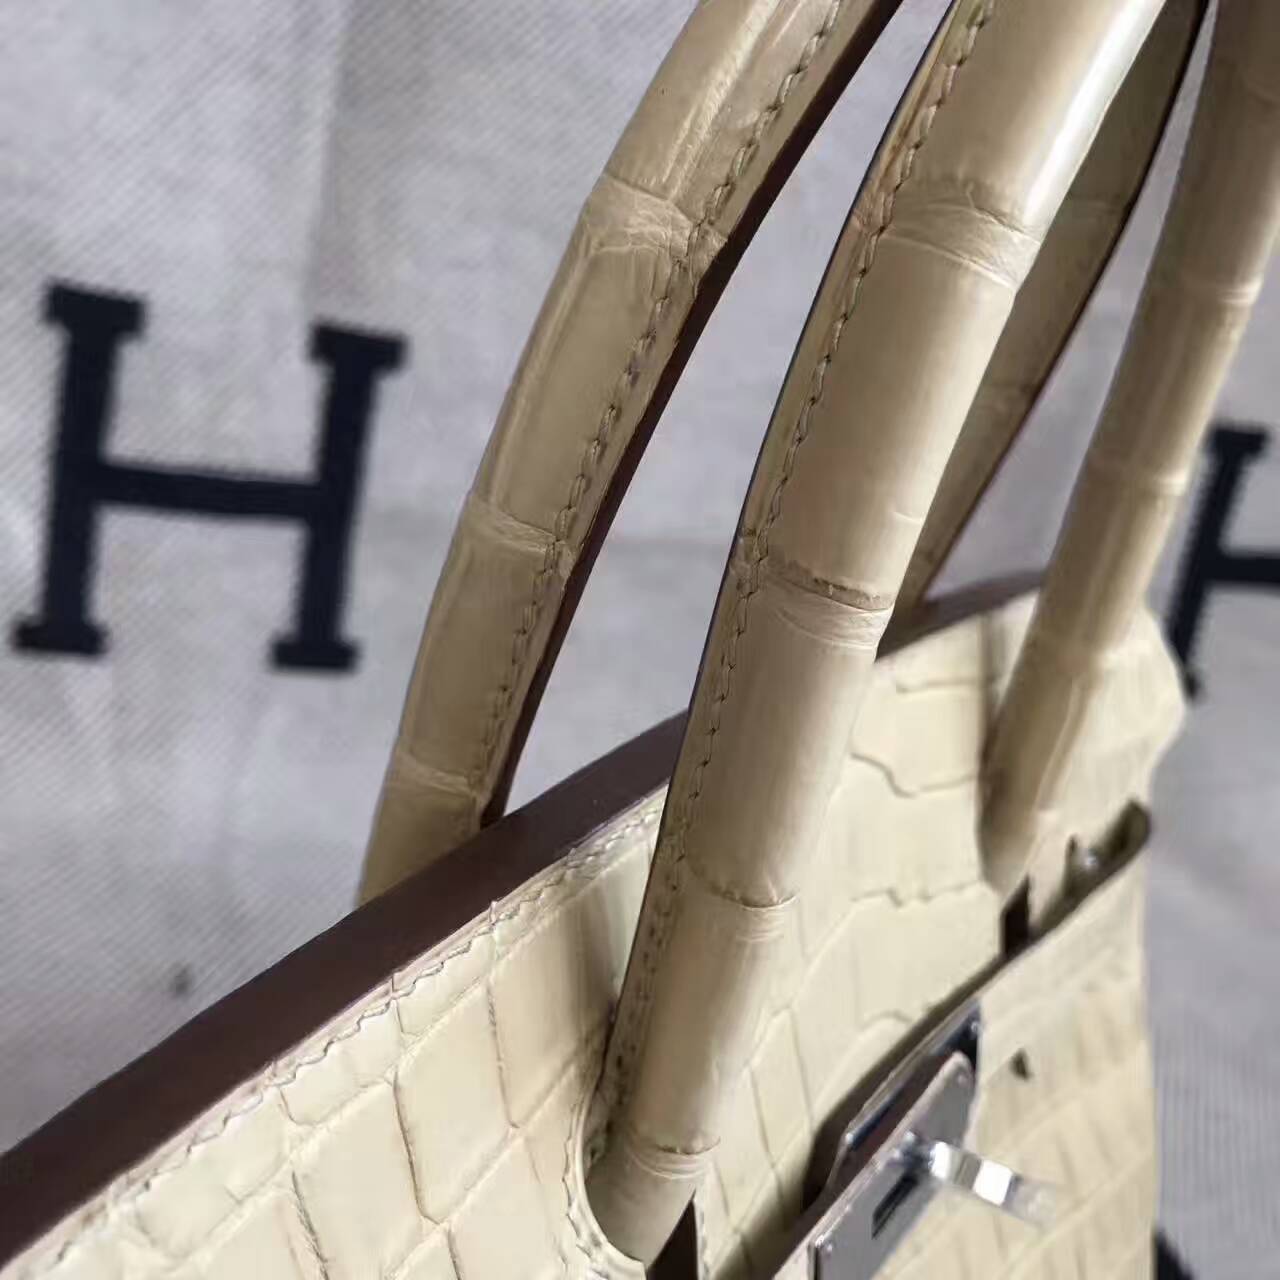 Sale Hermes 1C Yellow Crocodile Matt Leather Birkin Handbag 30cm